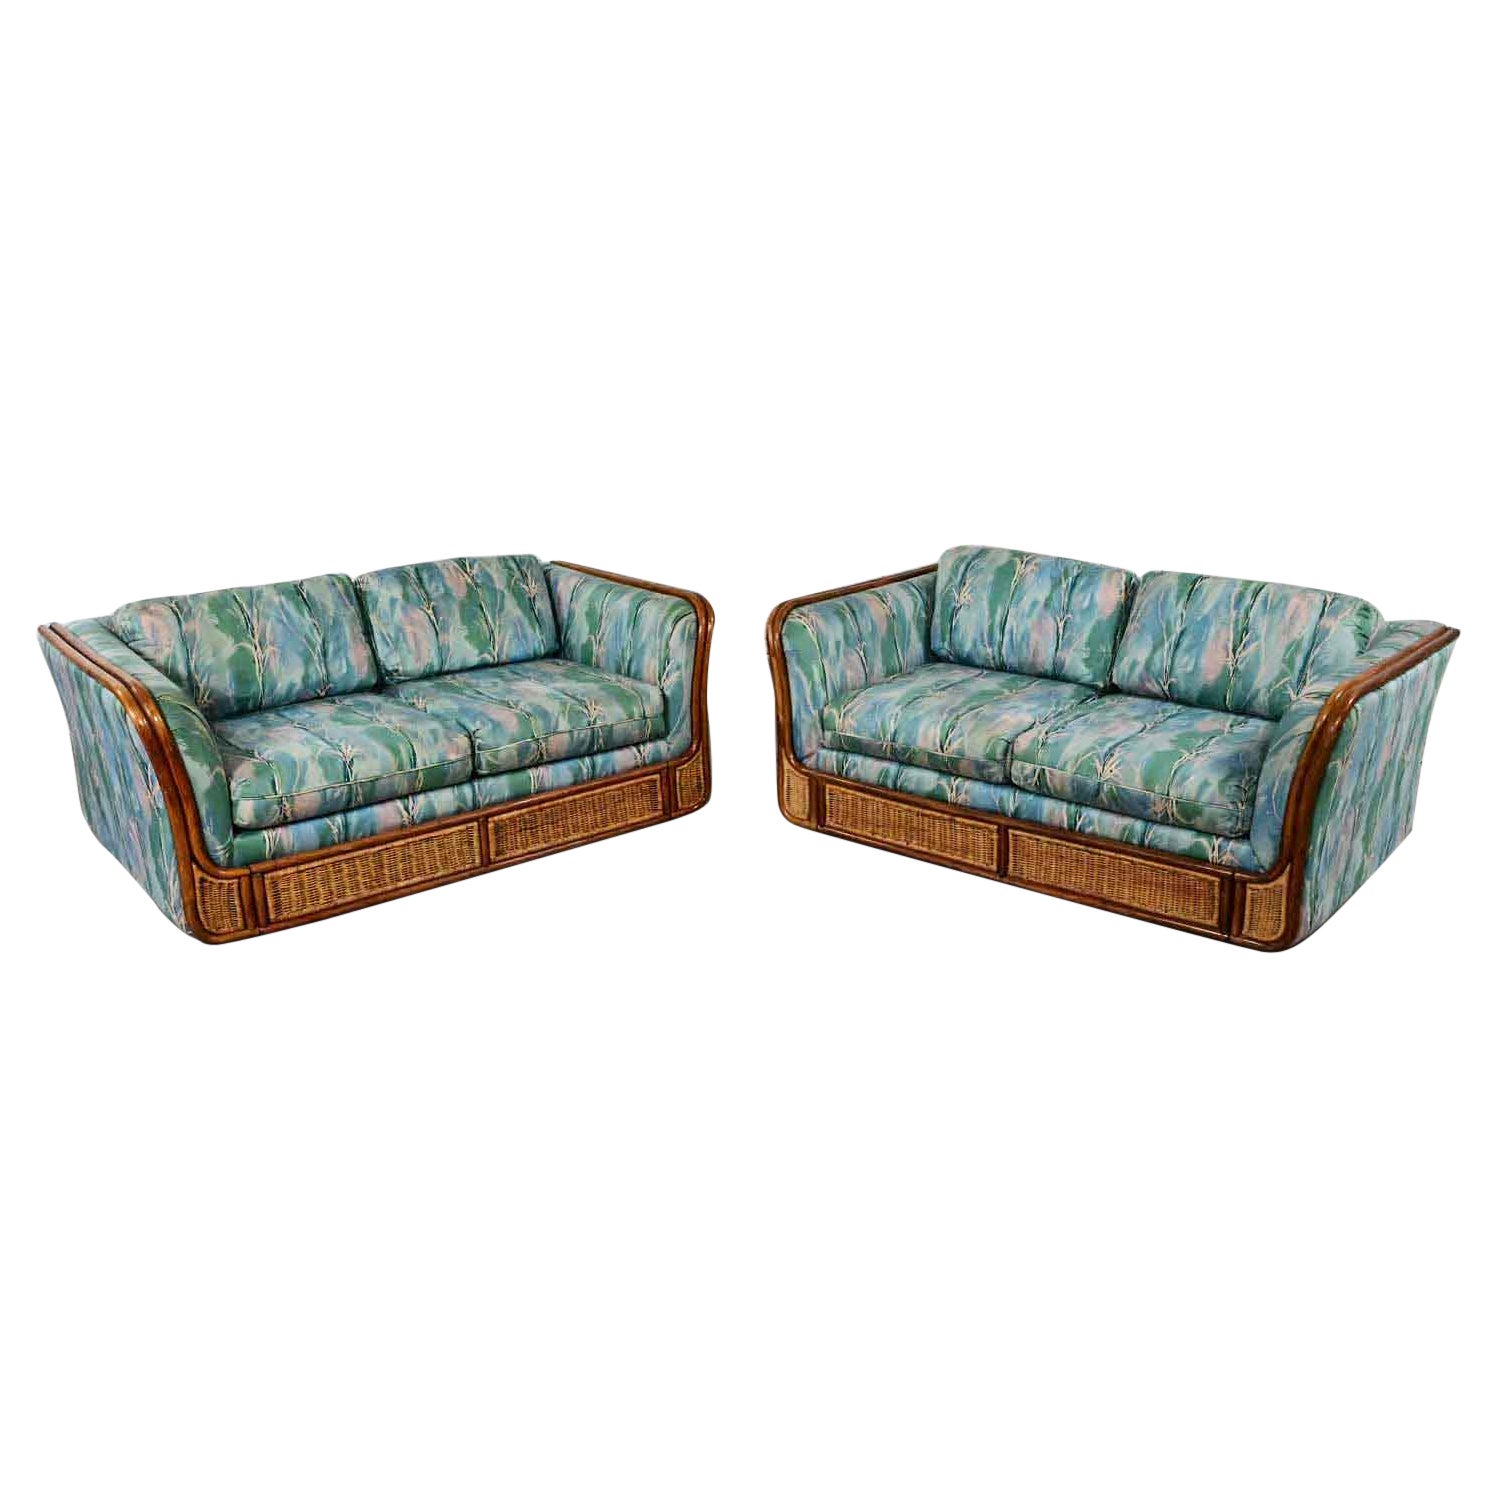 Fin du 20ème siècle Boho Chic Rotin et Osier Style Upholstering en vente